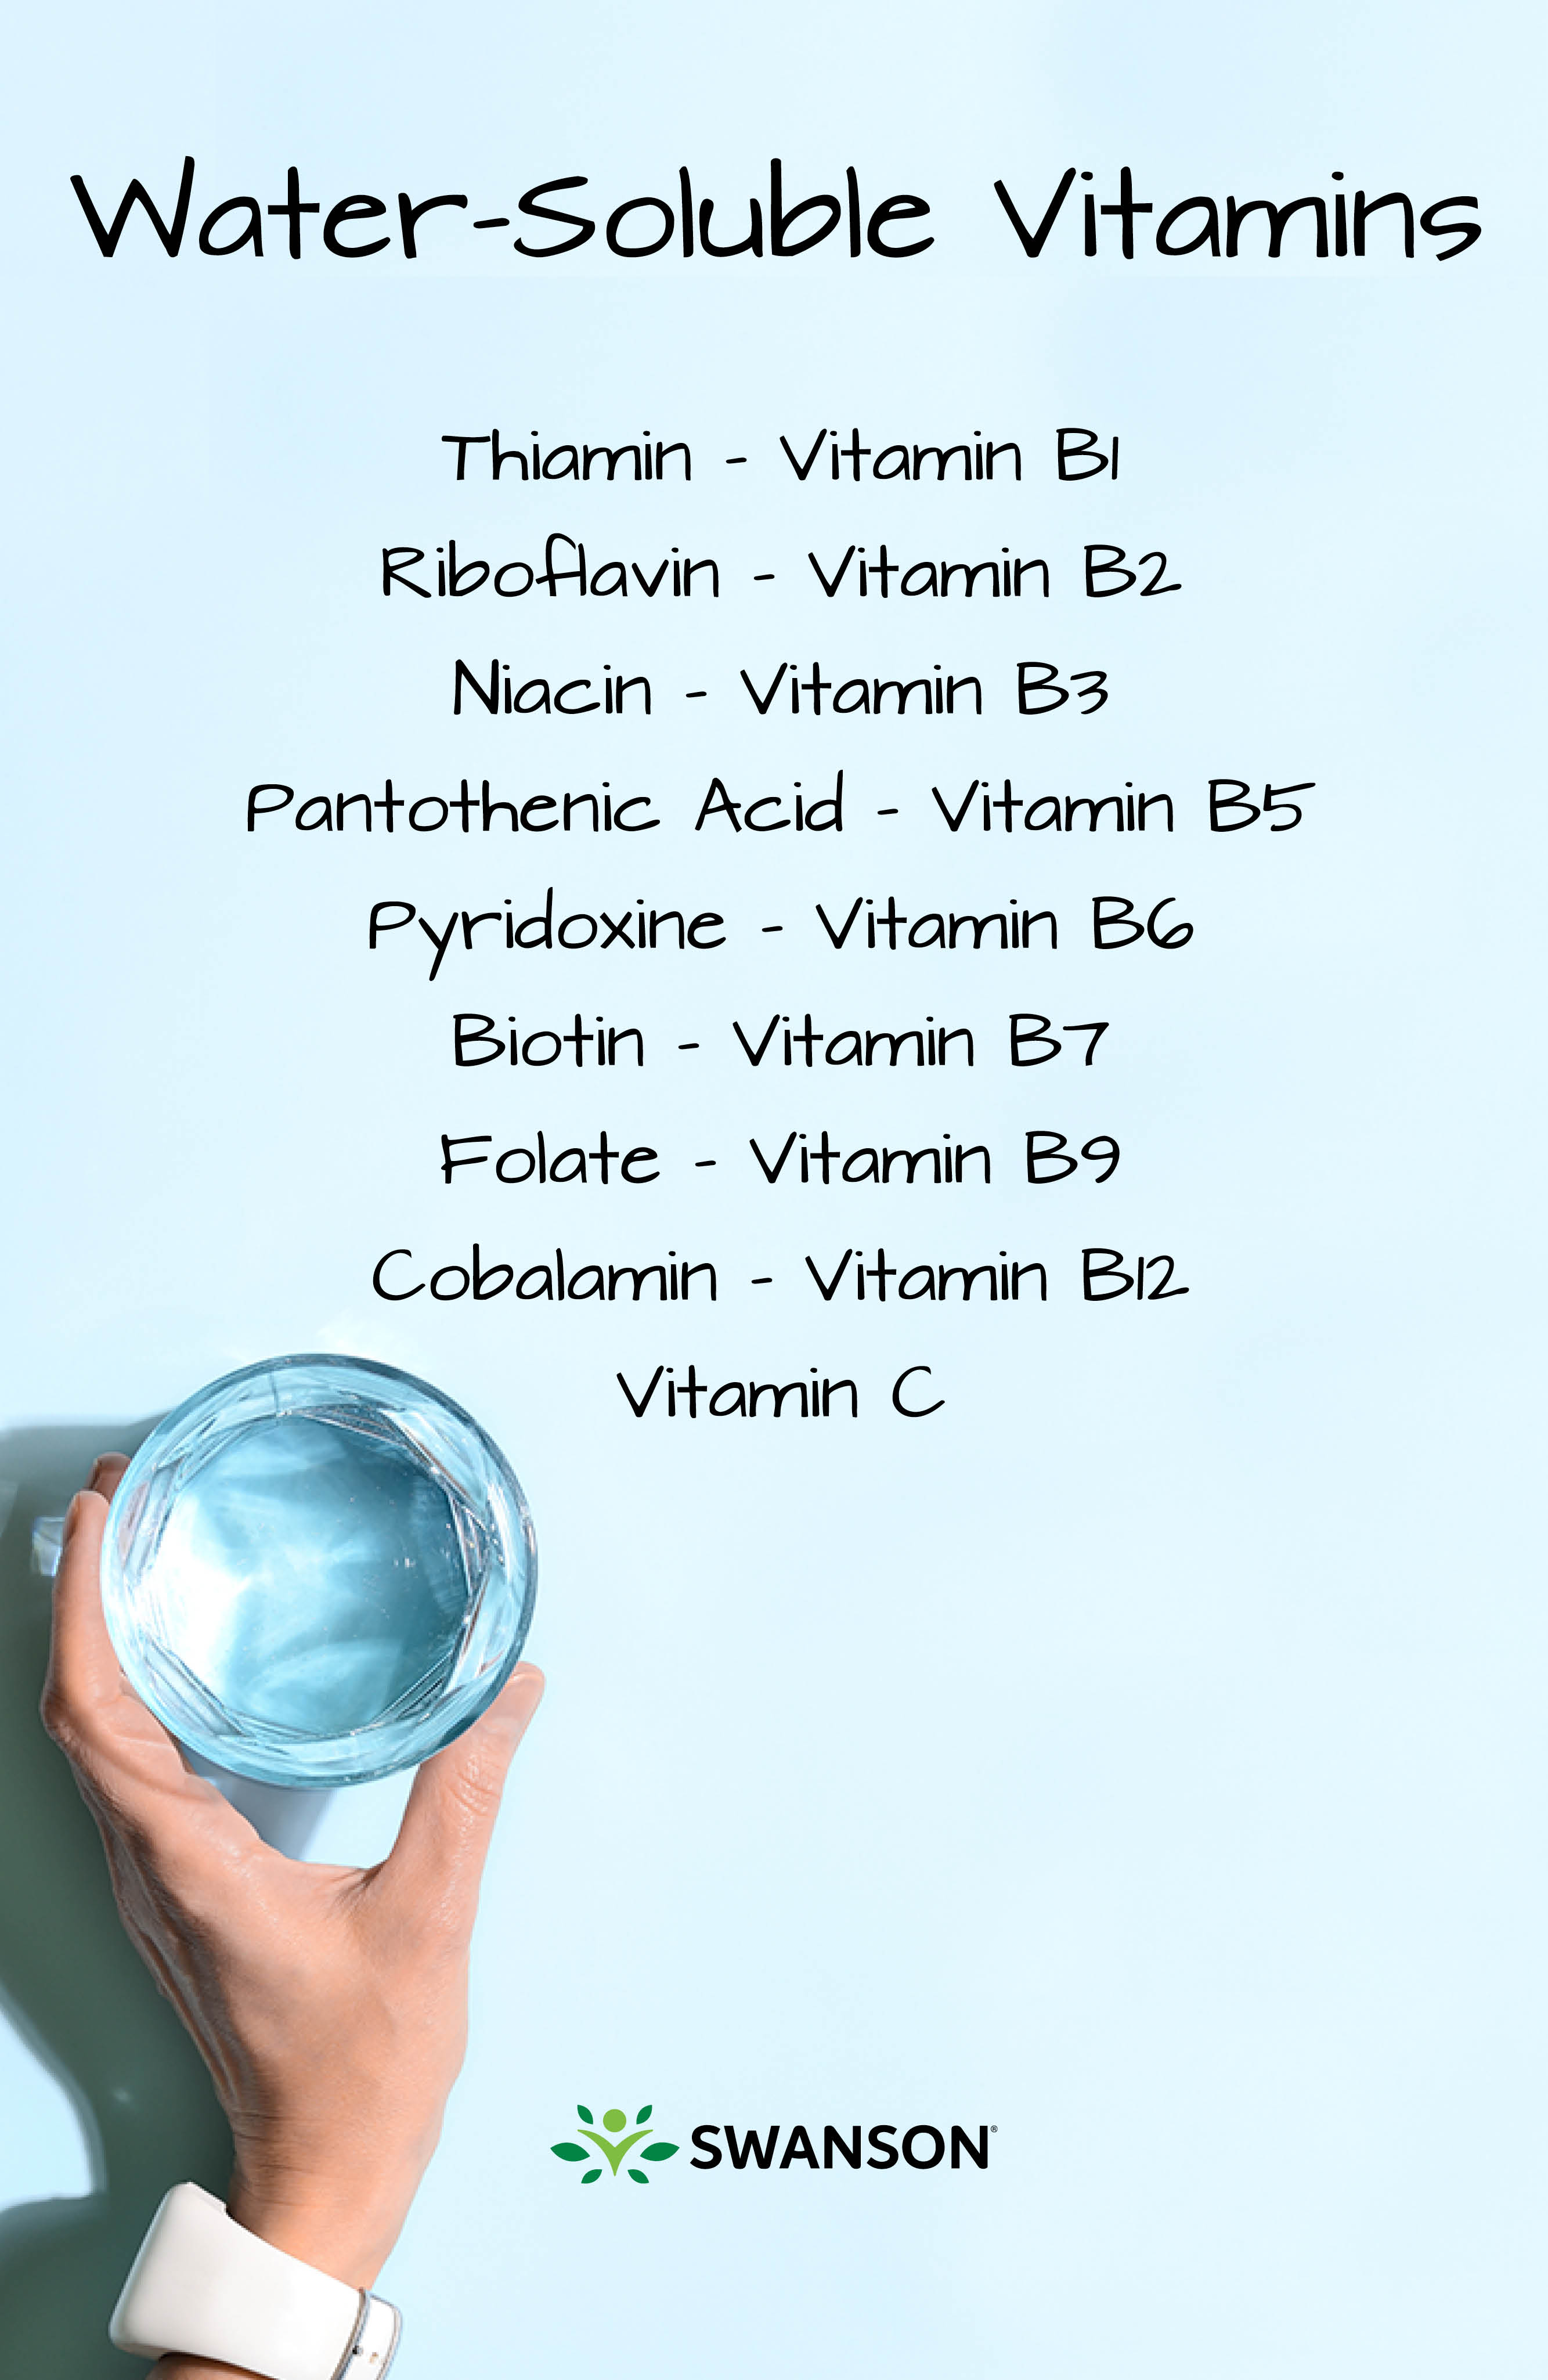 List of water soluble vitamins